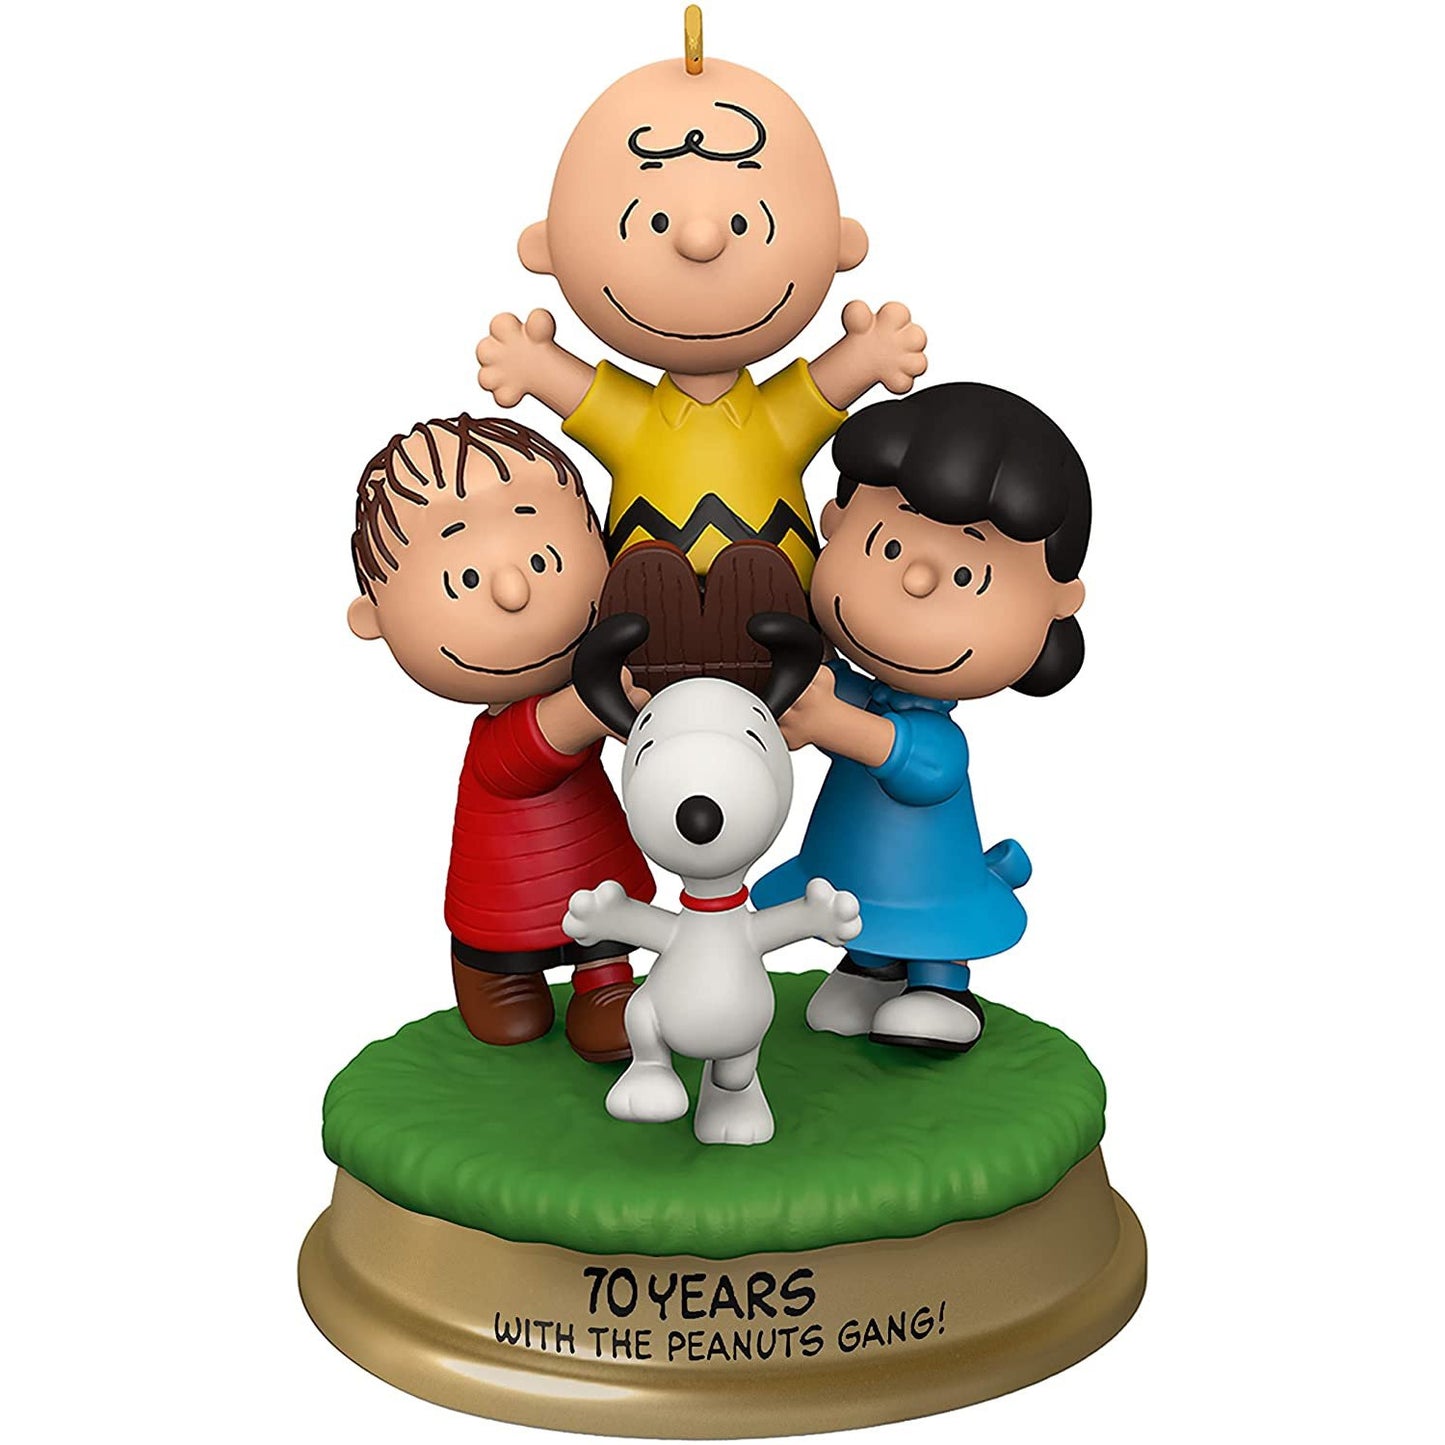 Hallmark Keepsake Christmas Ornament 2020, The Peanuts Gang 70th Anniversary You're a Good Man, Charlie Brown! With Sound